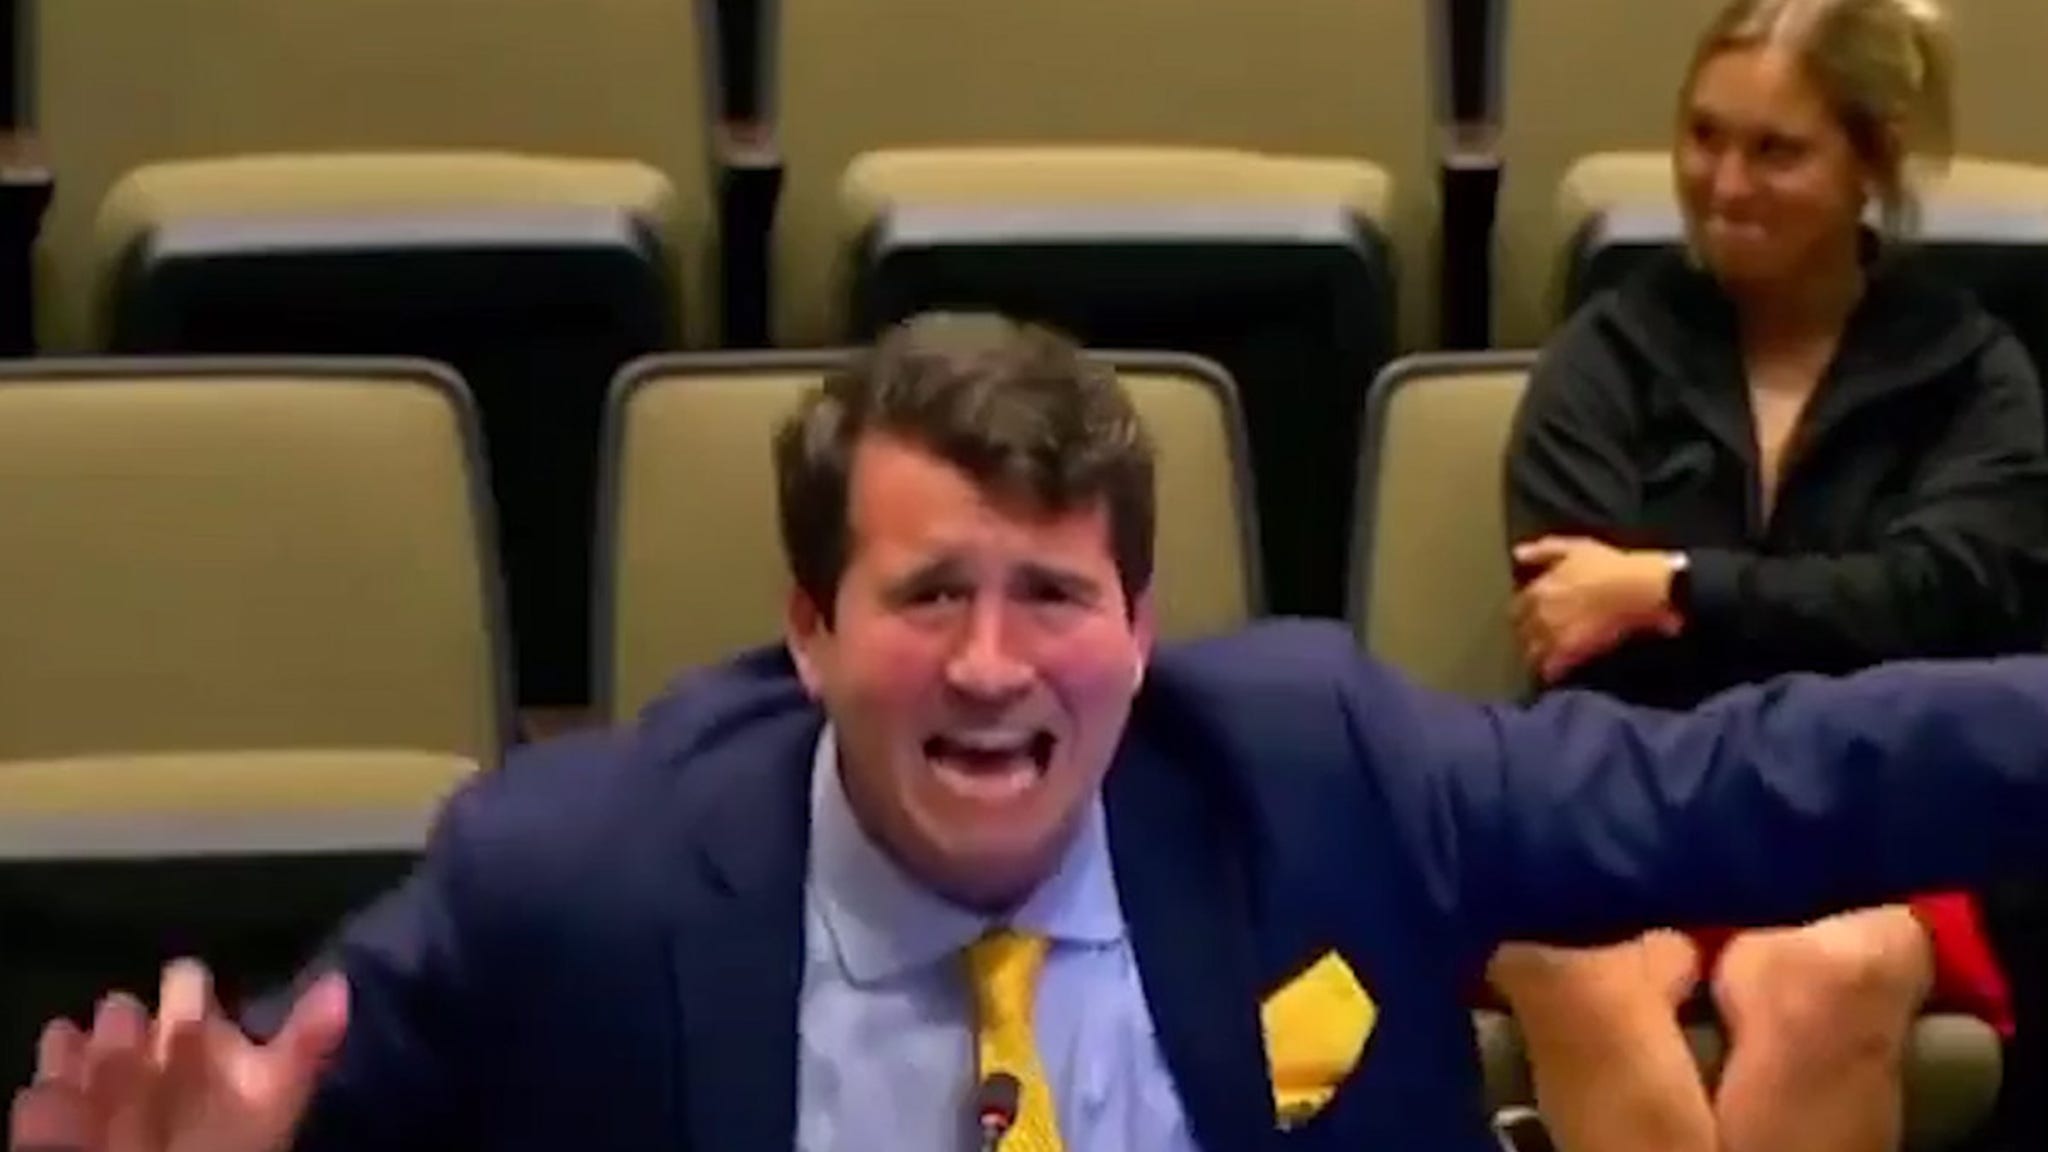 Comedian Raps About Killing Putin, Ukraine During TX City Council Meeting